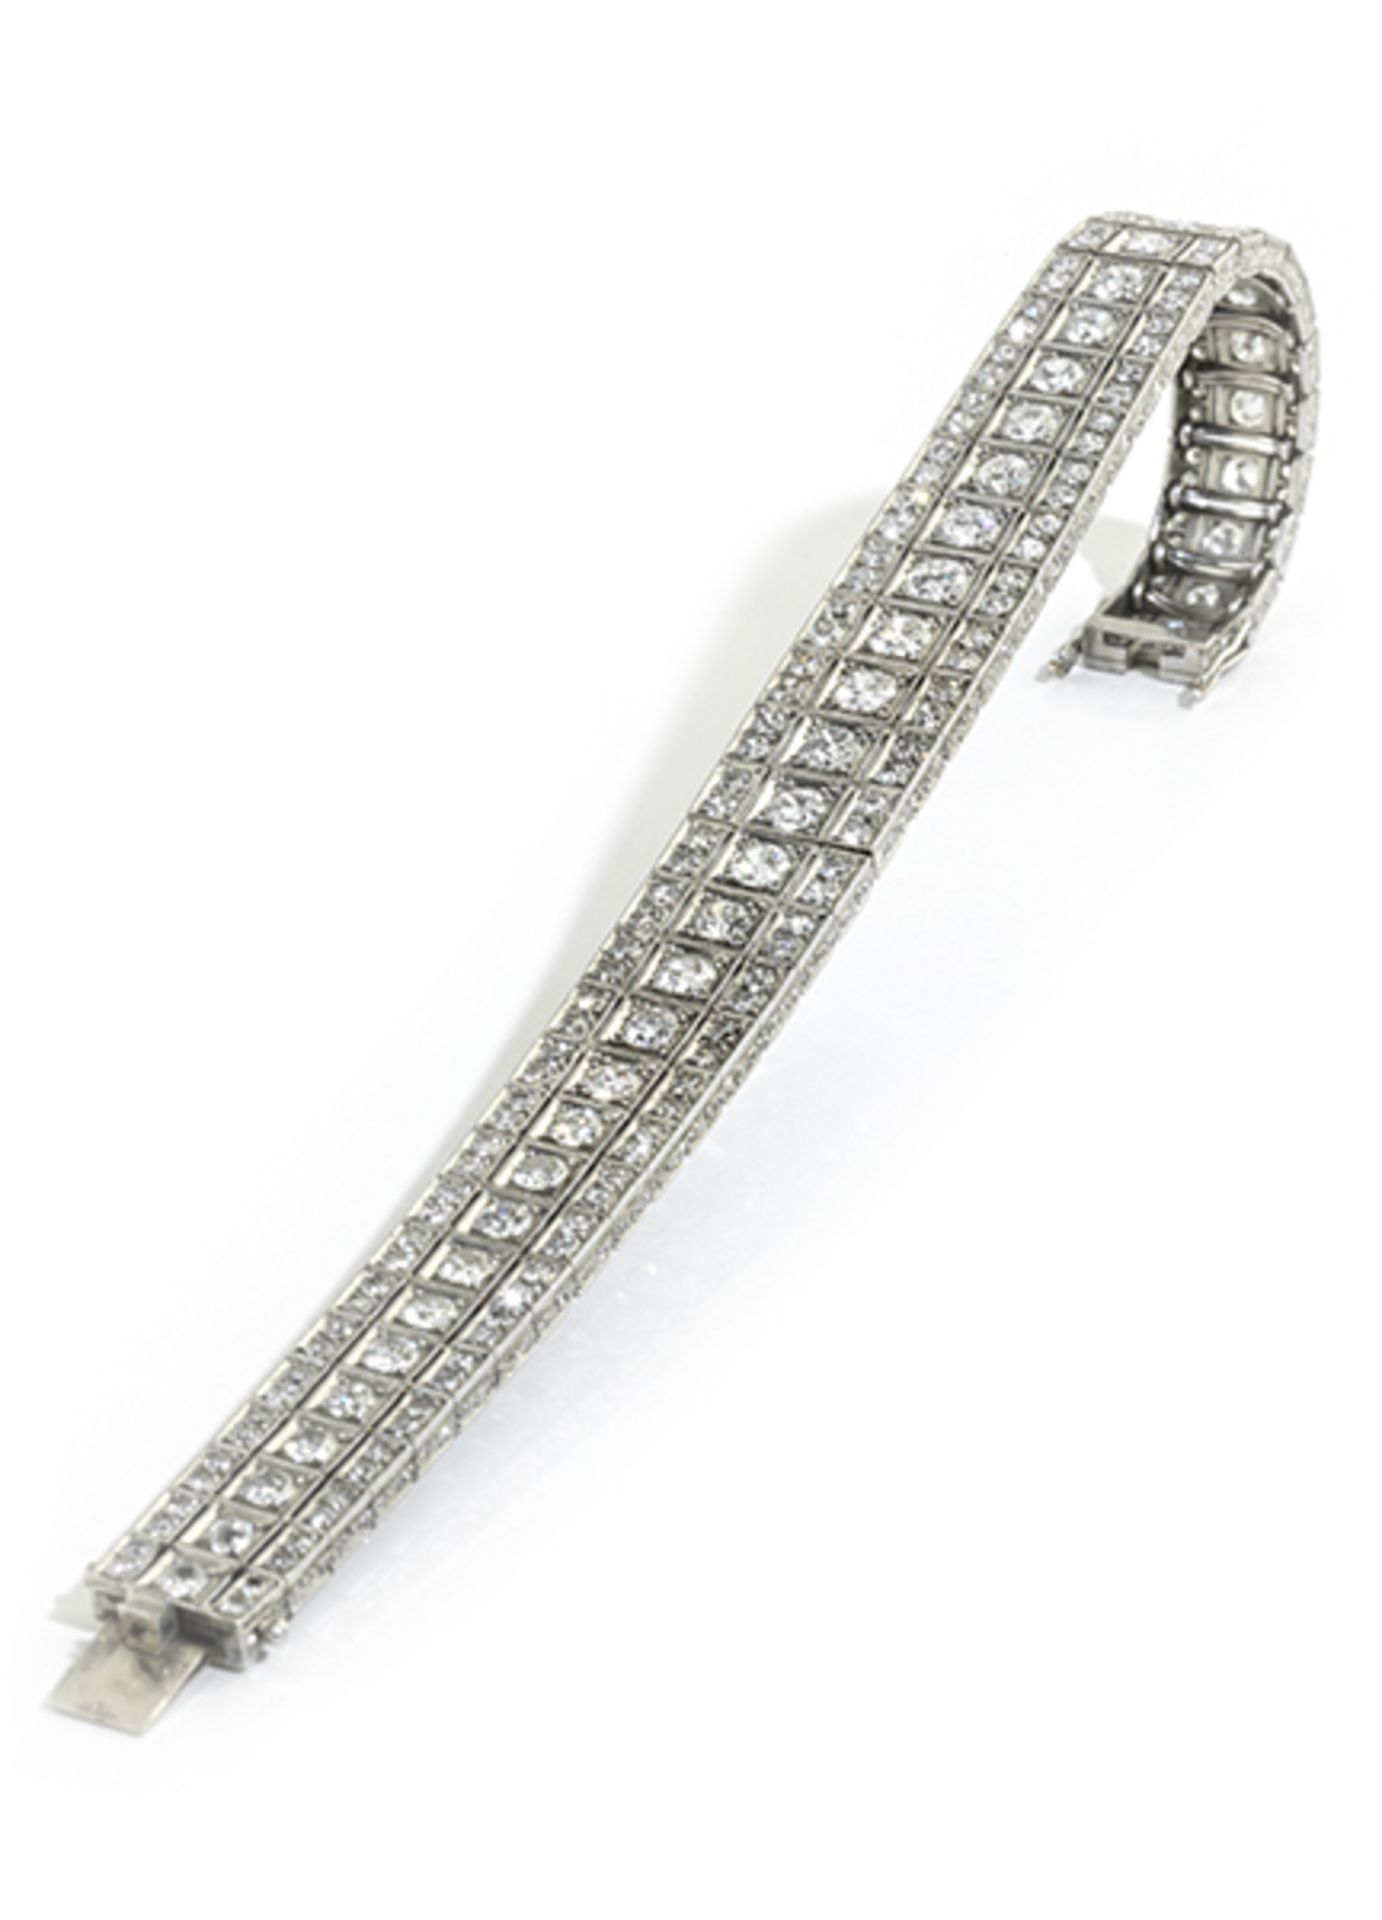 Art déco-Diamantarmband Länge: ca. 18,5 cm. Breite mittig: ca. 1,2 cm. Gewicht: ca. 35 g. Platin. Um